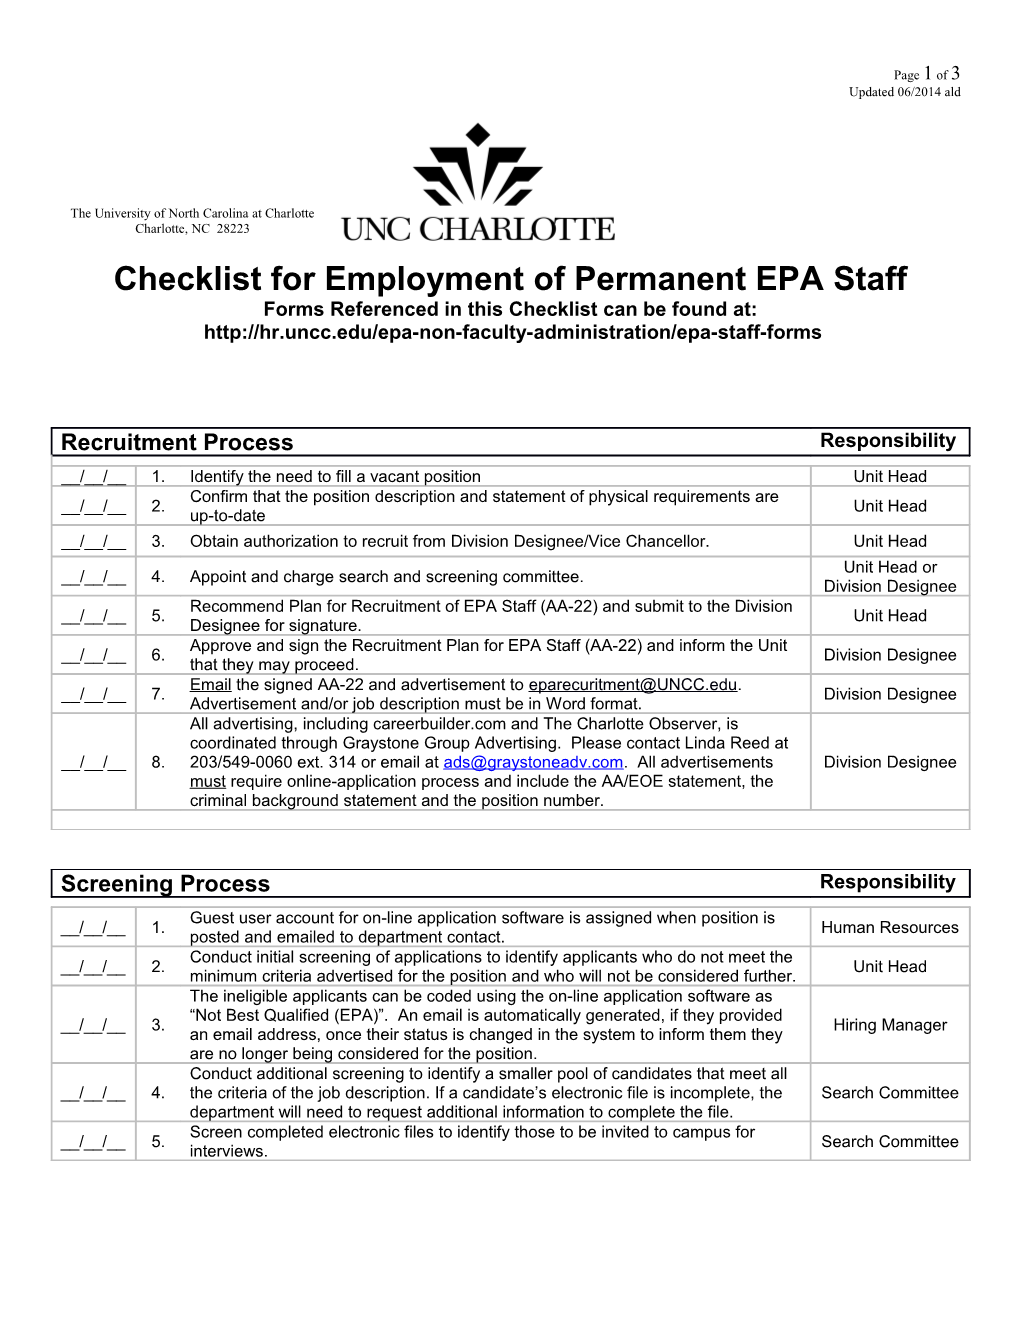 Checklist for Employment of Permanent EPA Staff